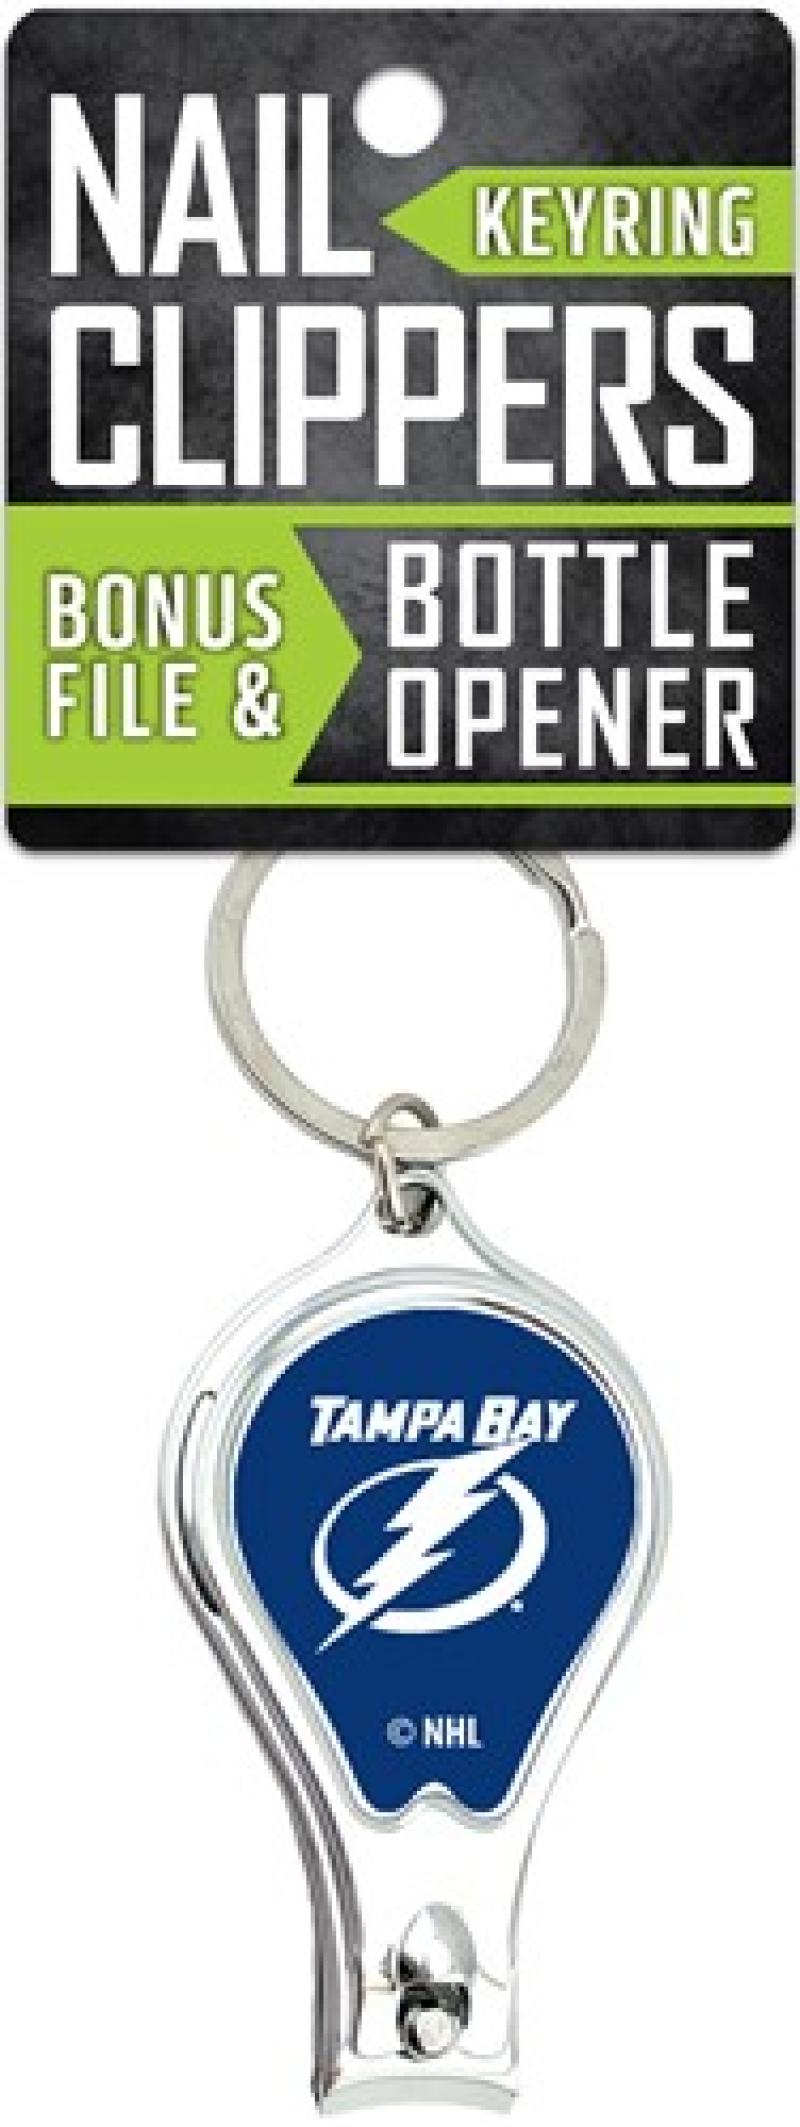 Tampa Bay Lightning Nail Clipper Keyring w/Bonus File & Bottle Opener Image 1